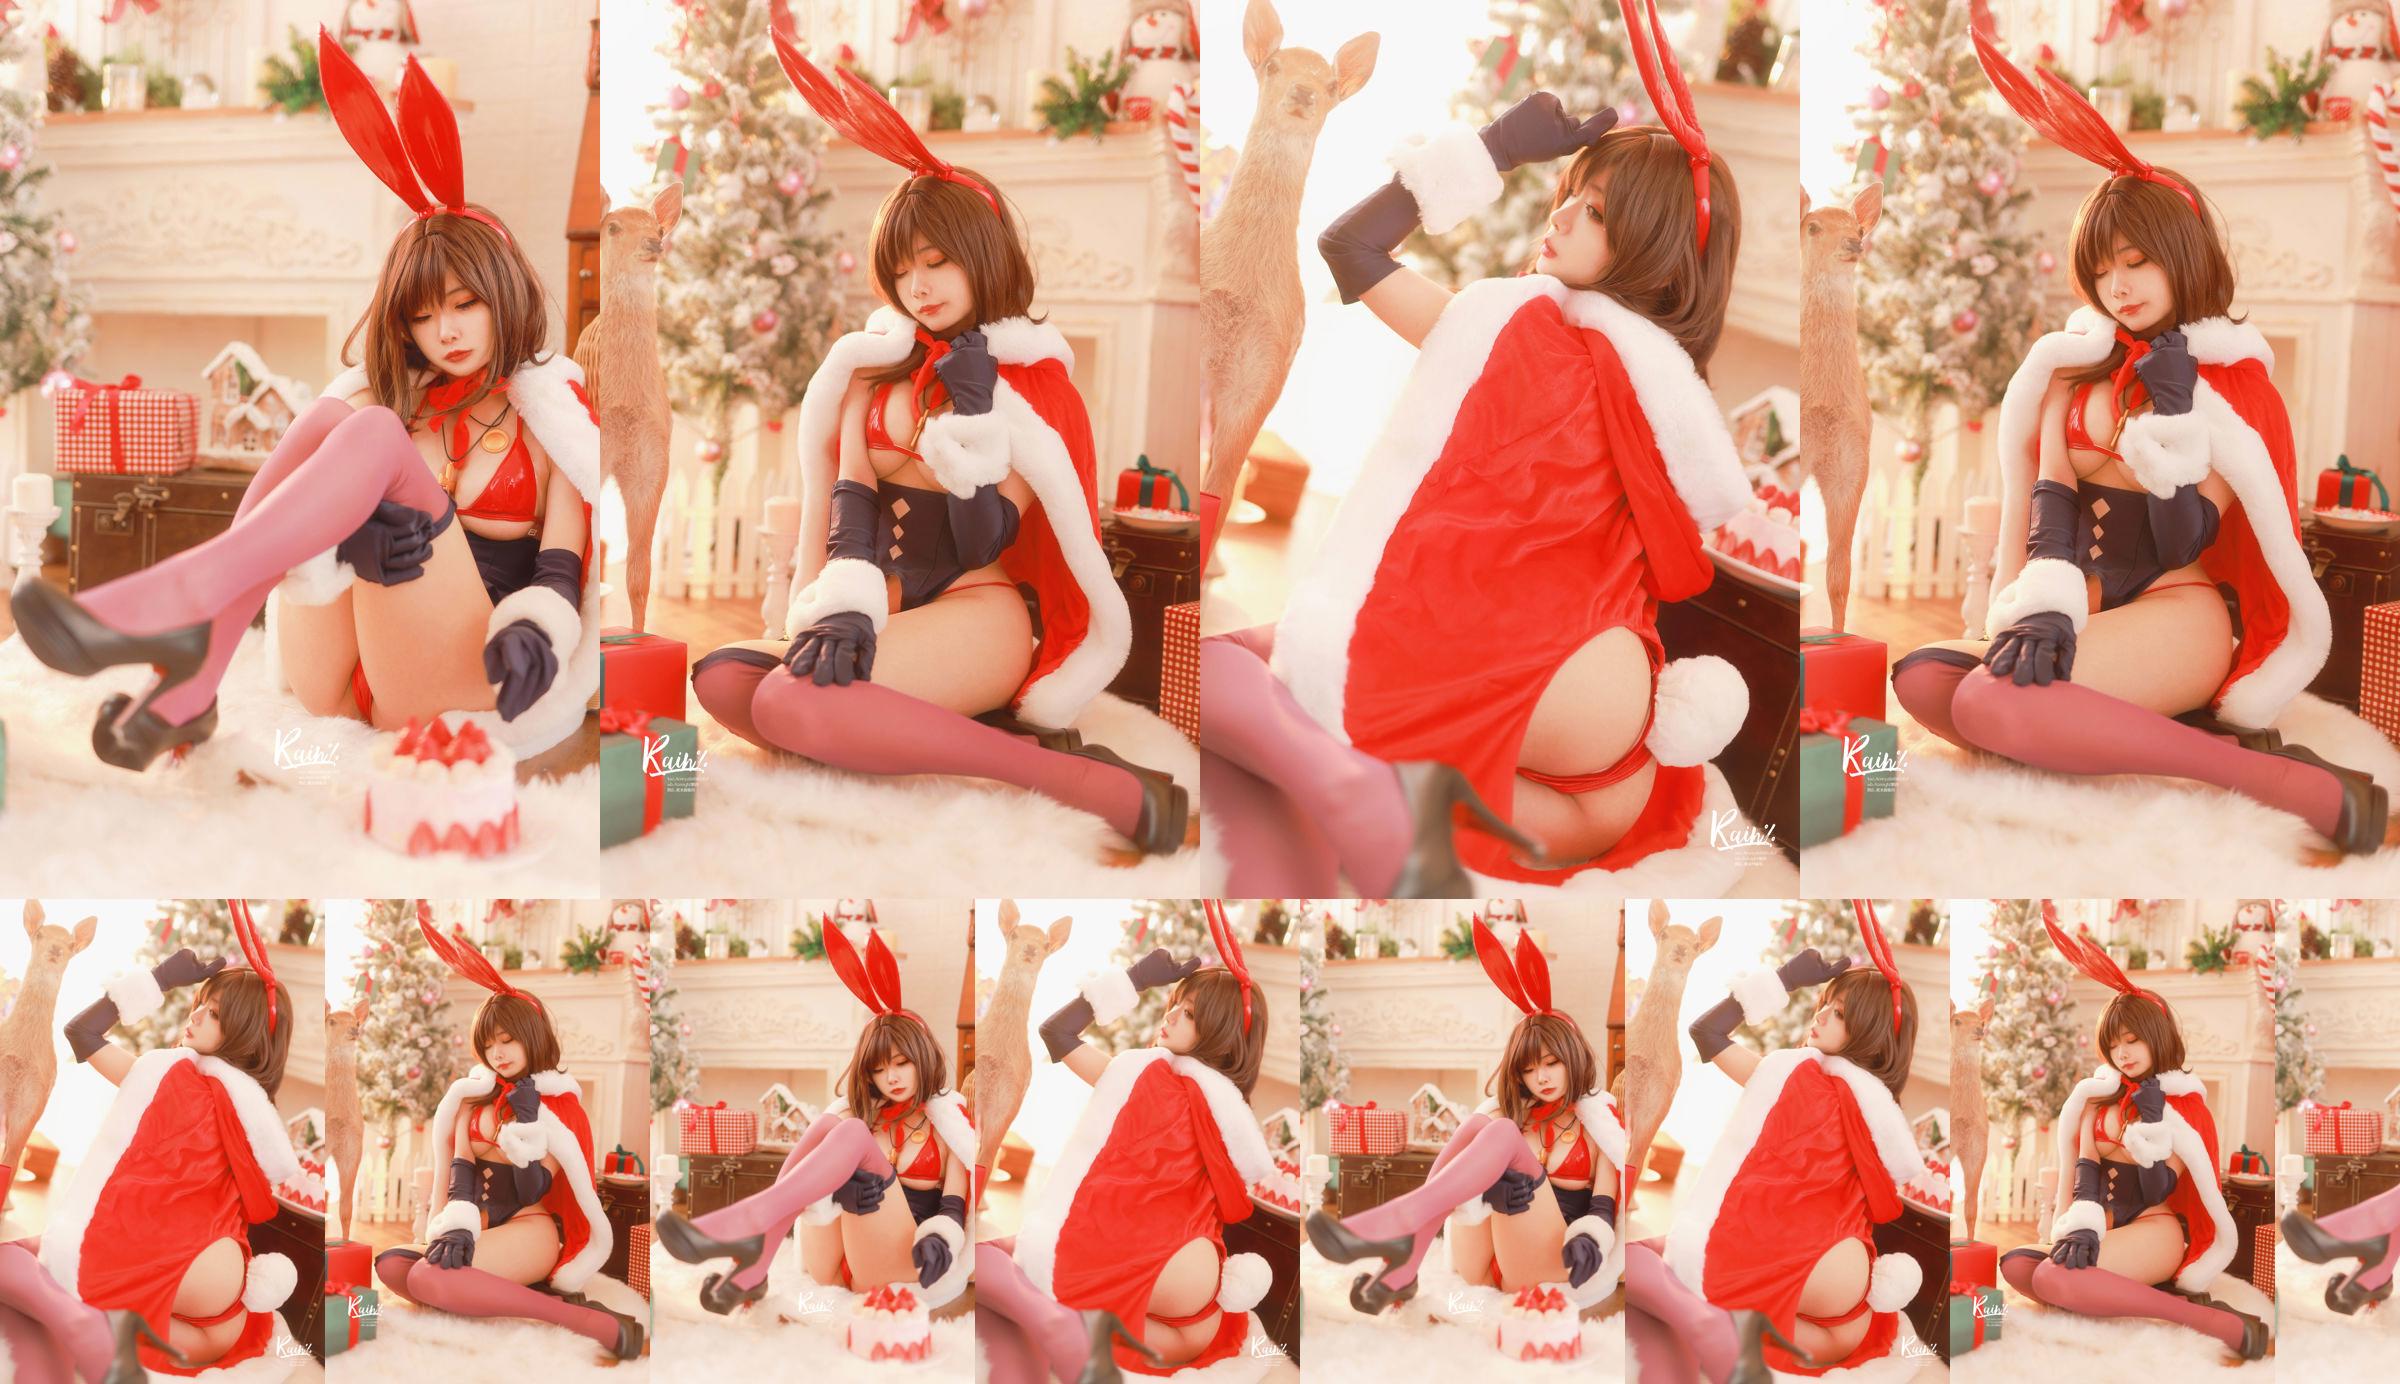 [Net Red COSER Photo] Anime blogger Rainight 魈雨-Christmas Rabbit No.256e2e Pagina 1